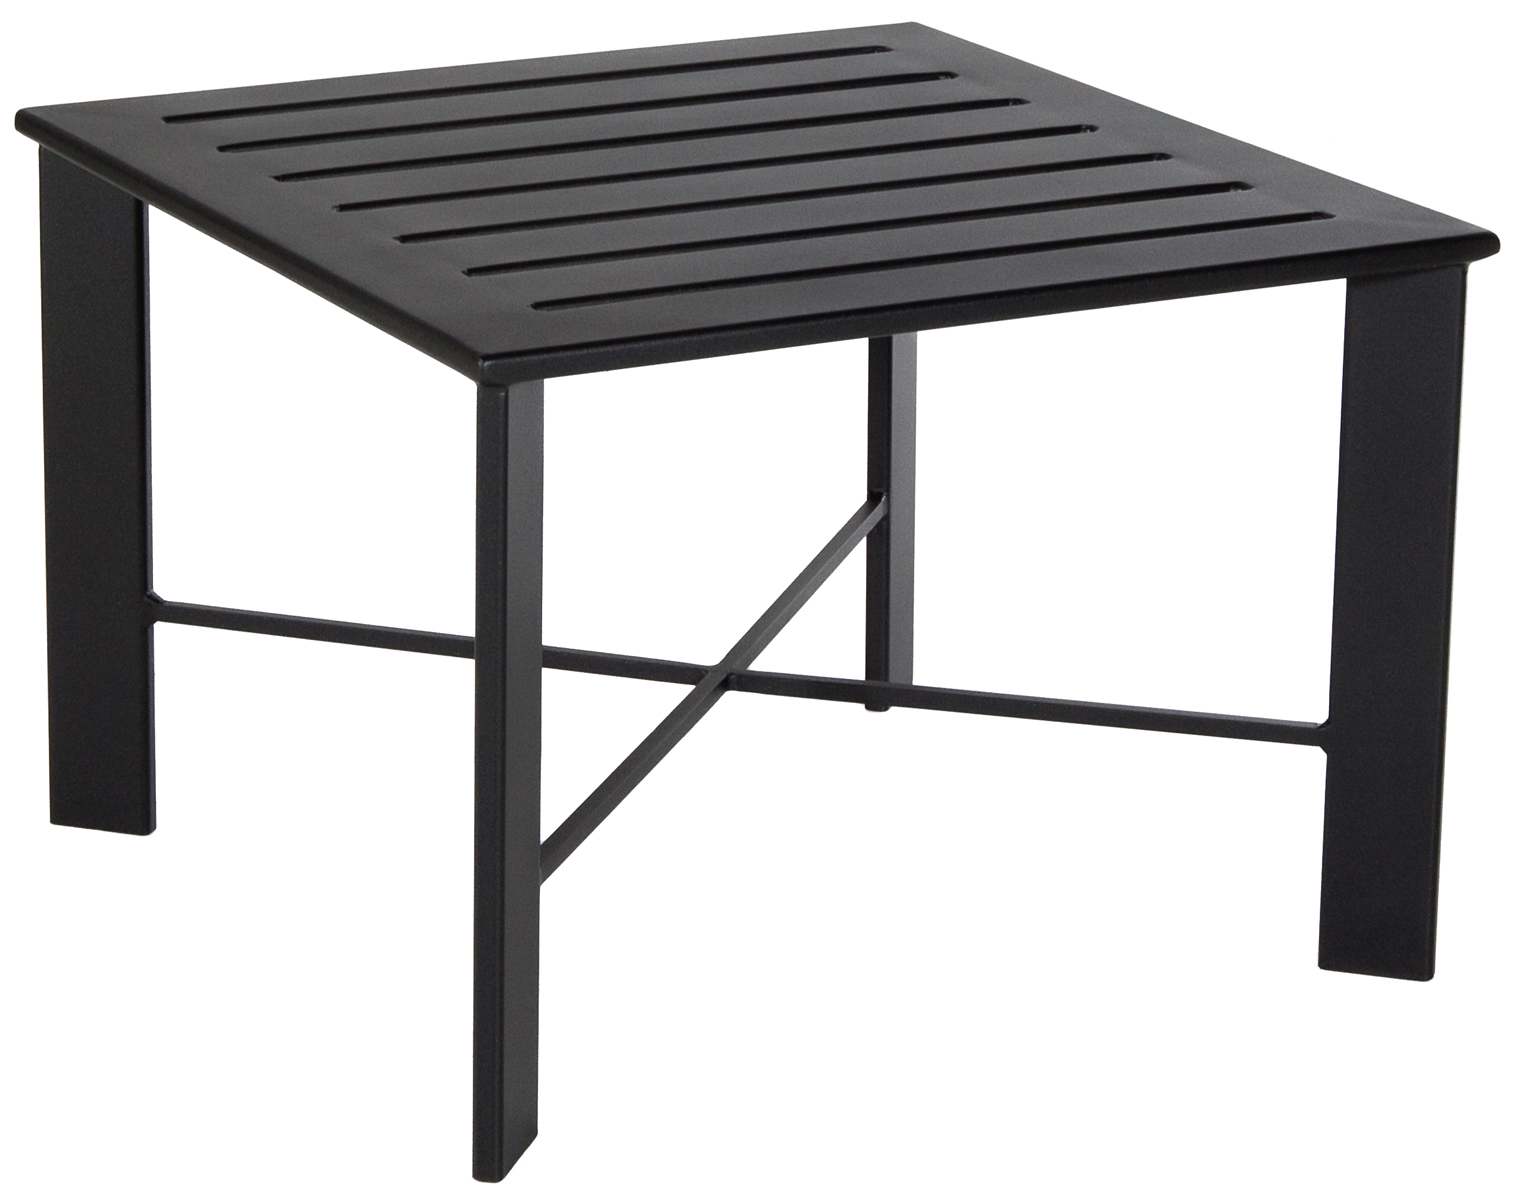 Modern Aluminum Slatted Top Tables